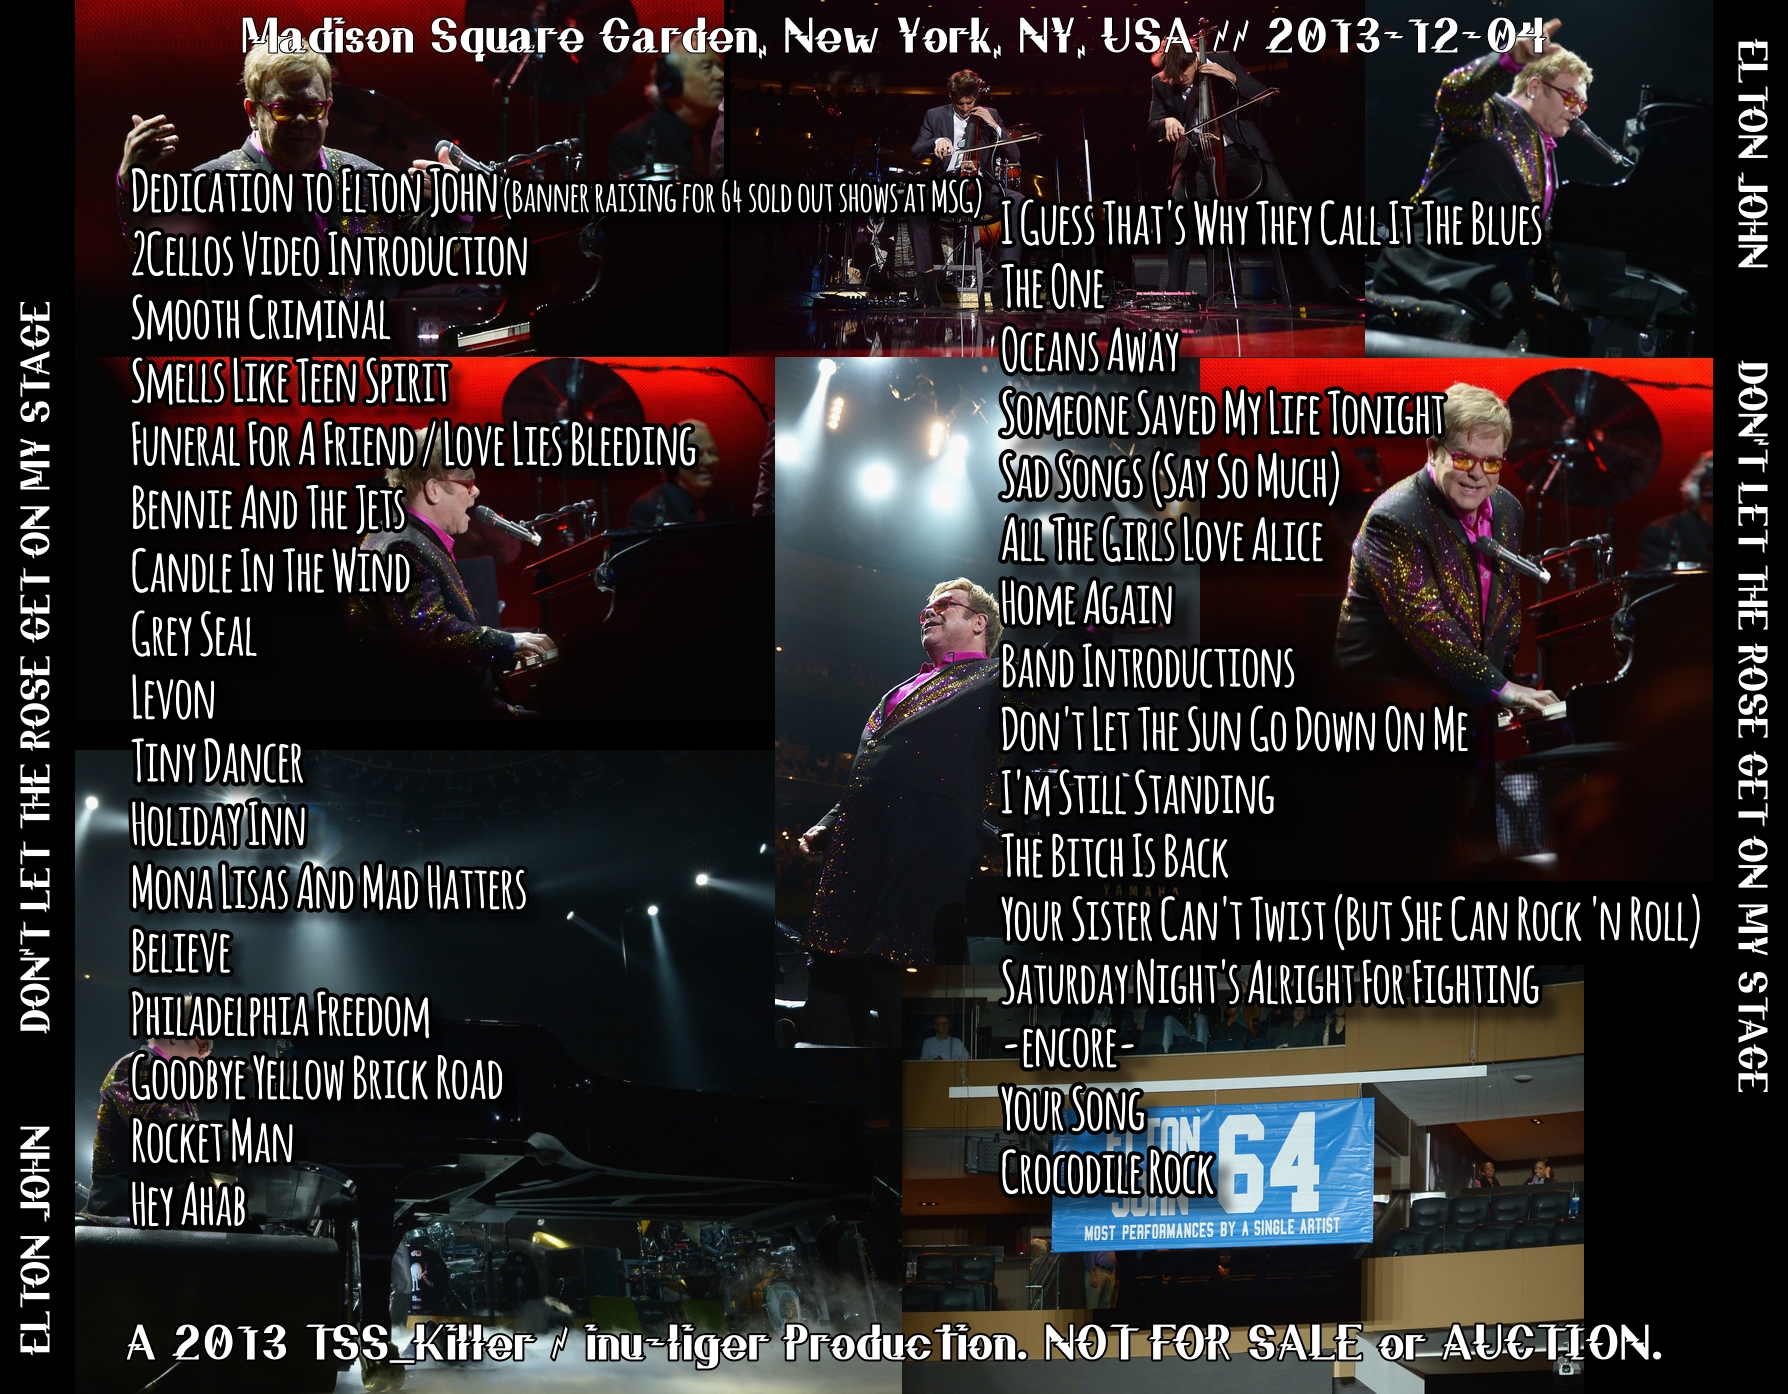 EltonJohn2013-12-04_2CellosMadisonSquareGardenNYC (2).jpg